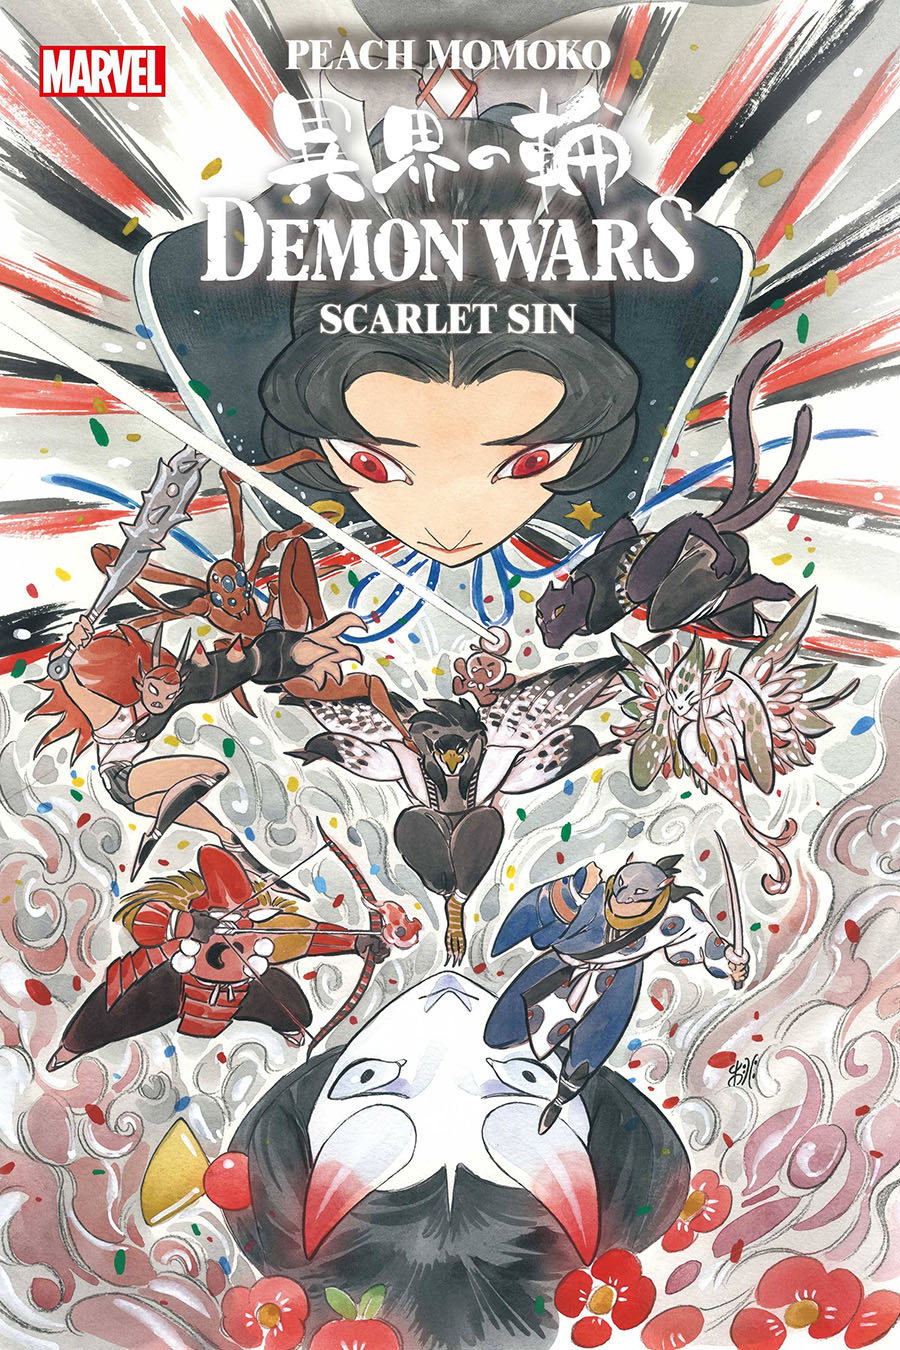 Demon Wars Scarlet Sin #1 (One Shot) Cover A Regular Peach Momoko Cover